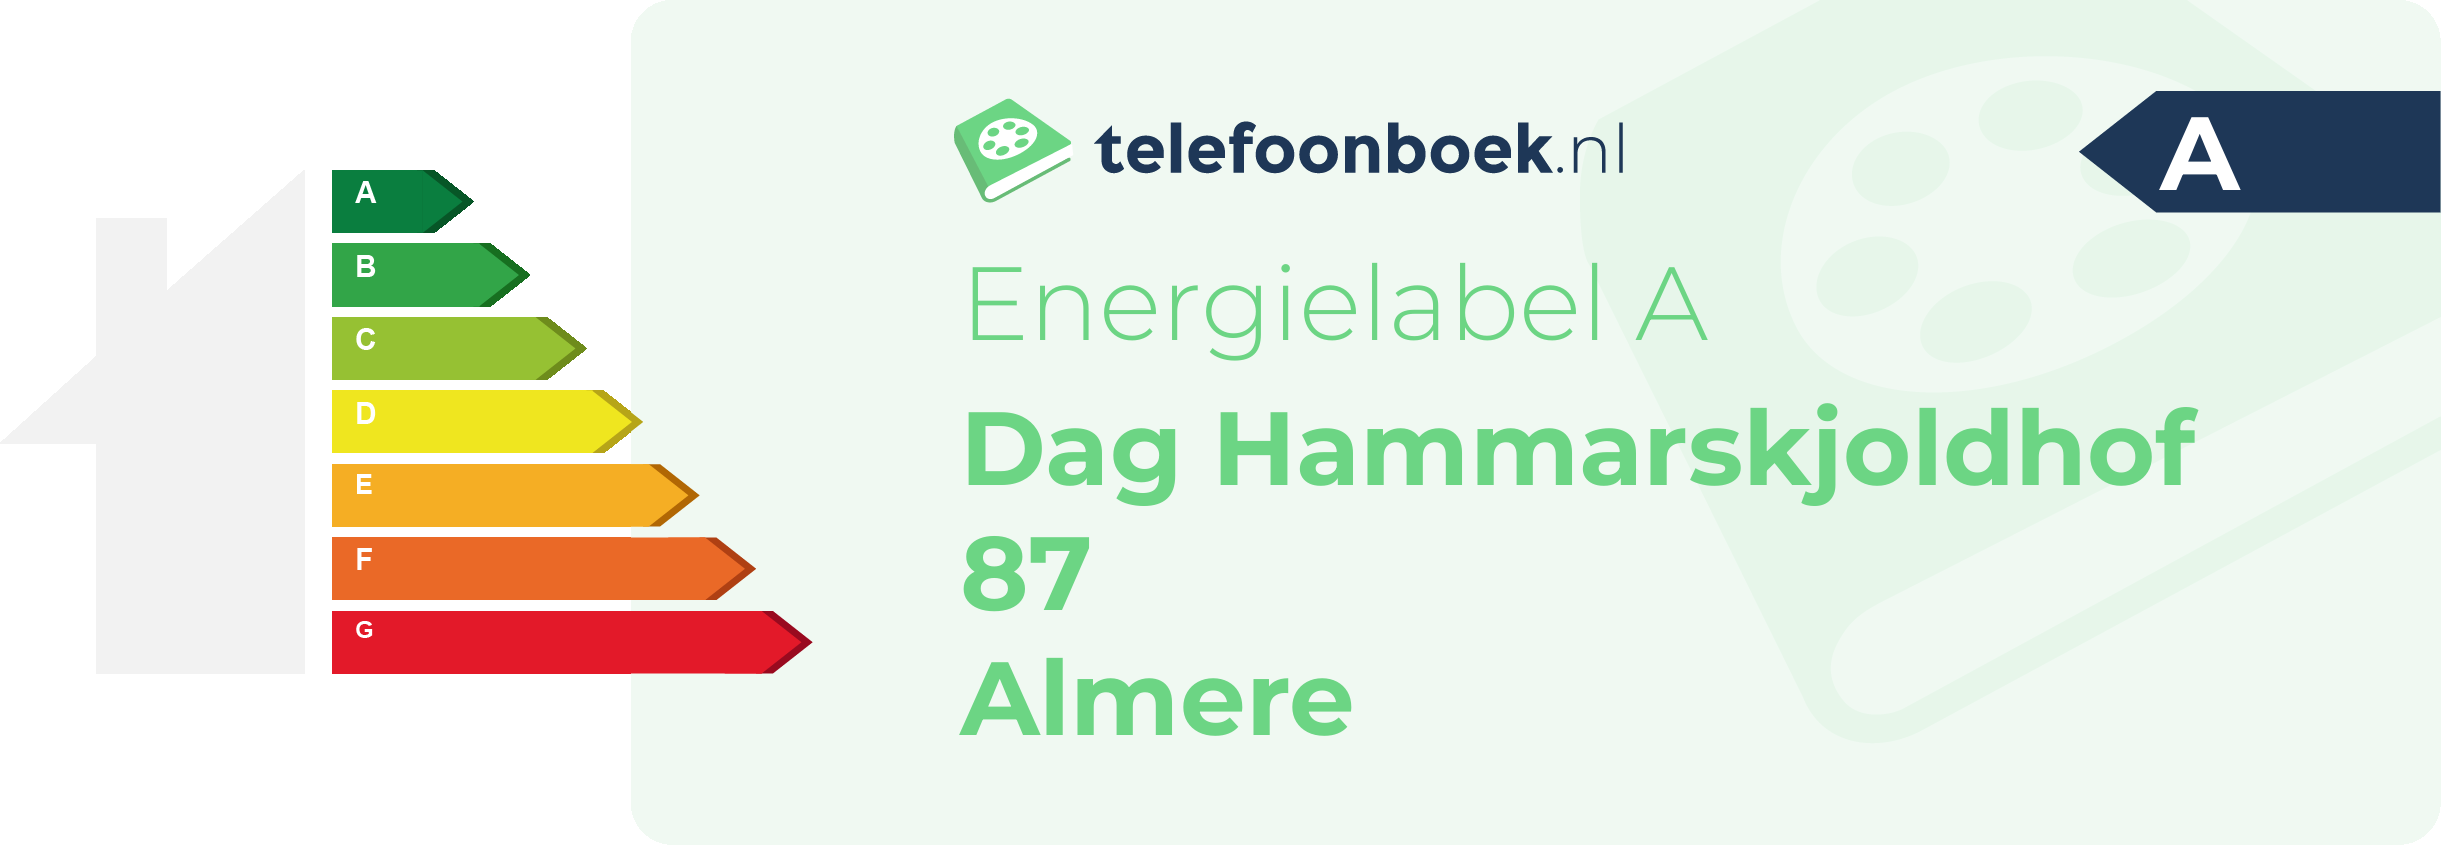 Energielabel Dag Hammarskjoldhof 87 Almere